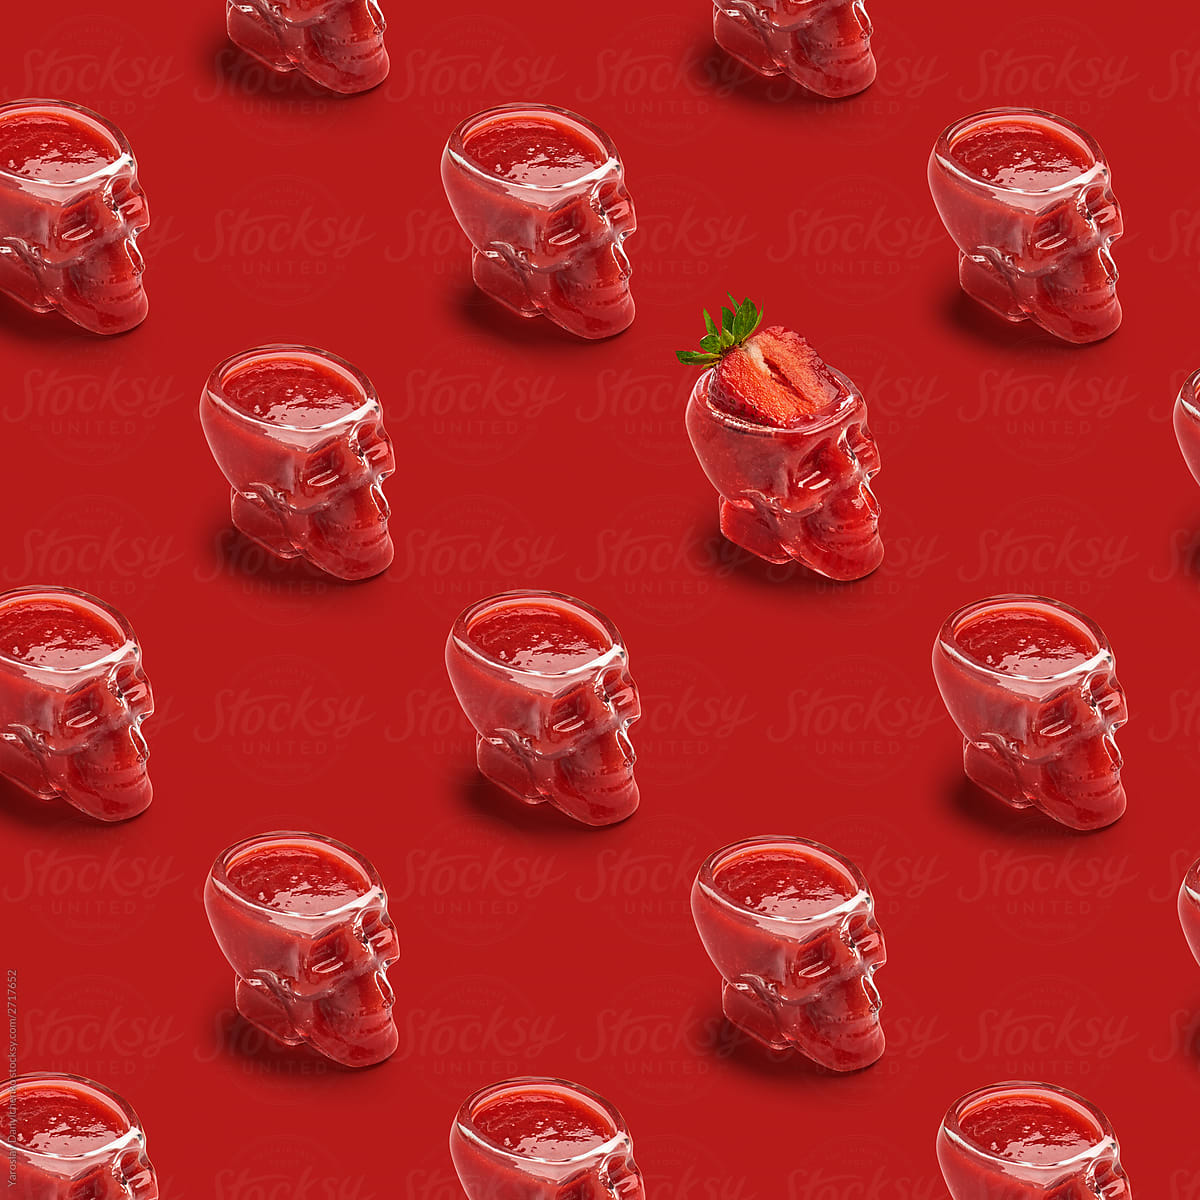 Skull glass with strawberry jam.